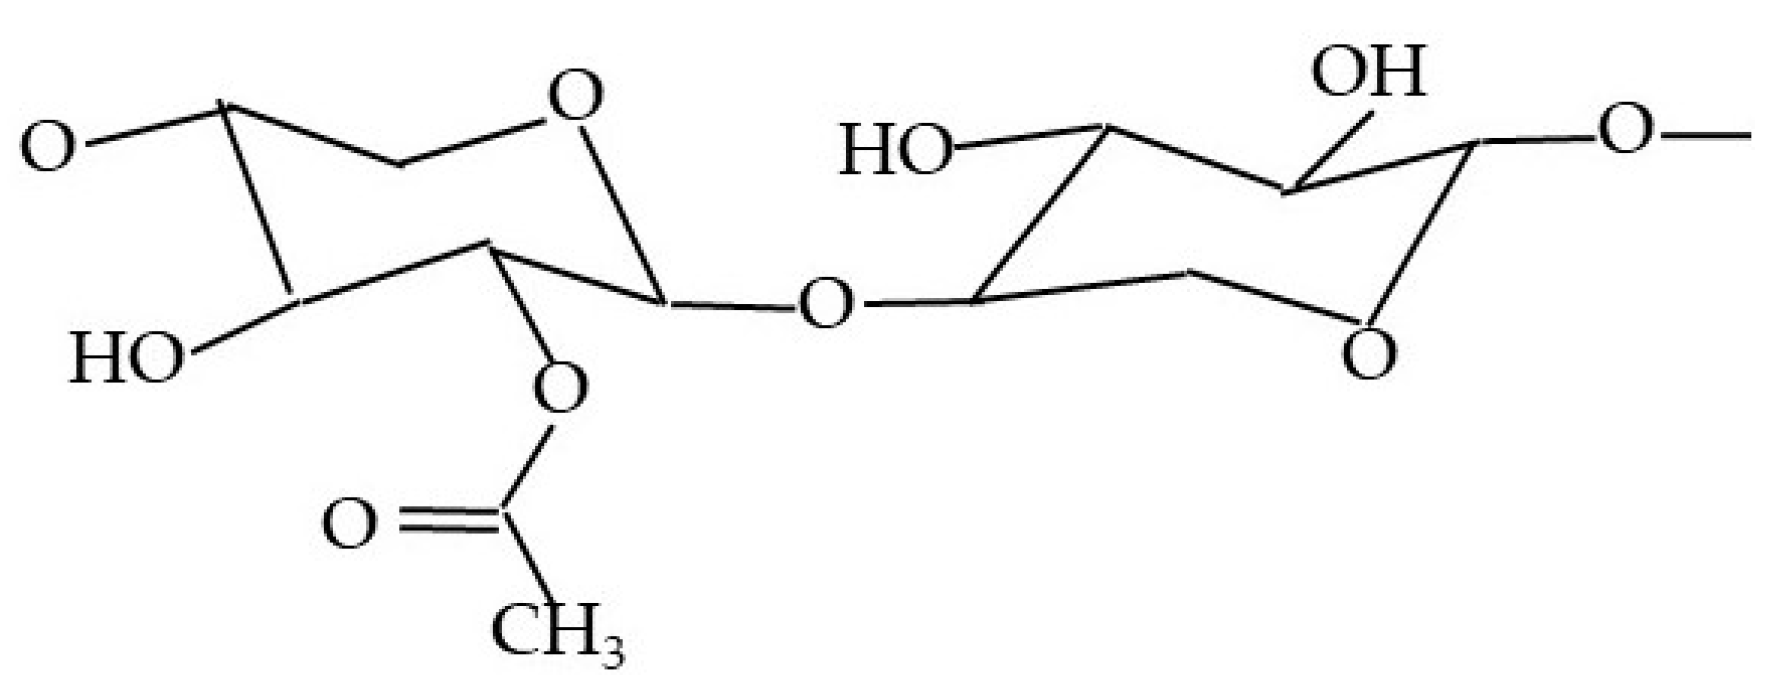 hemicellulose structure